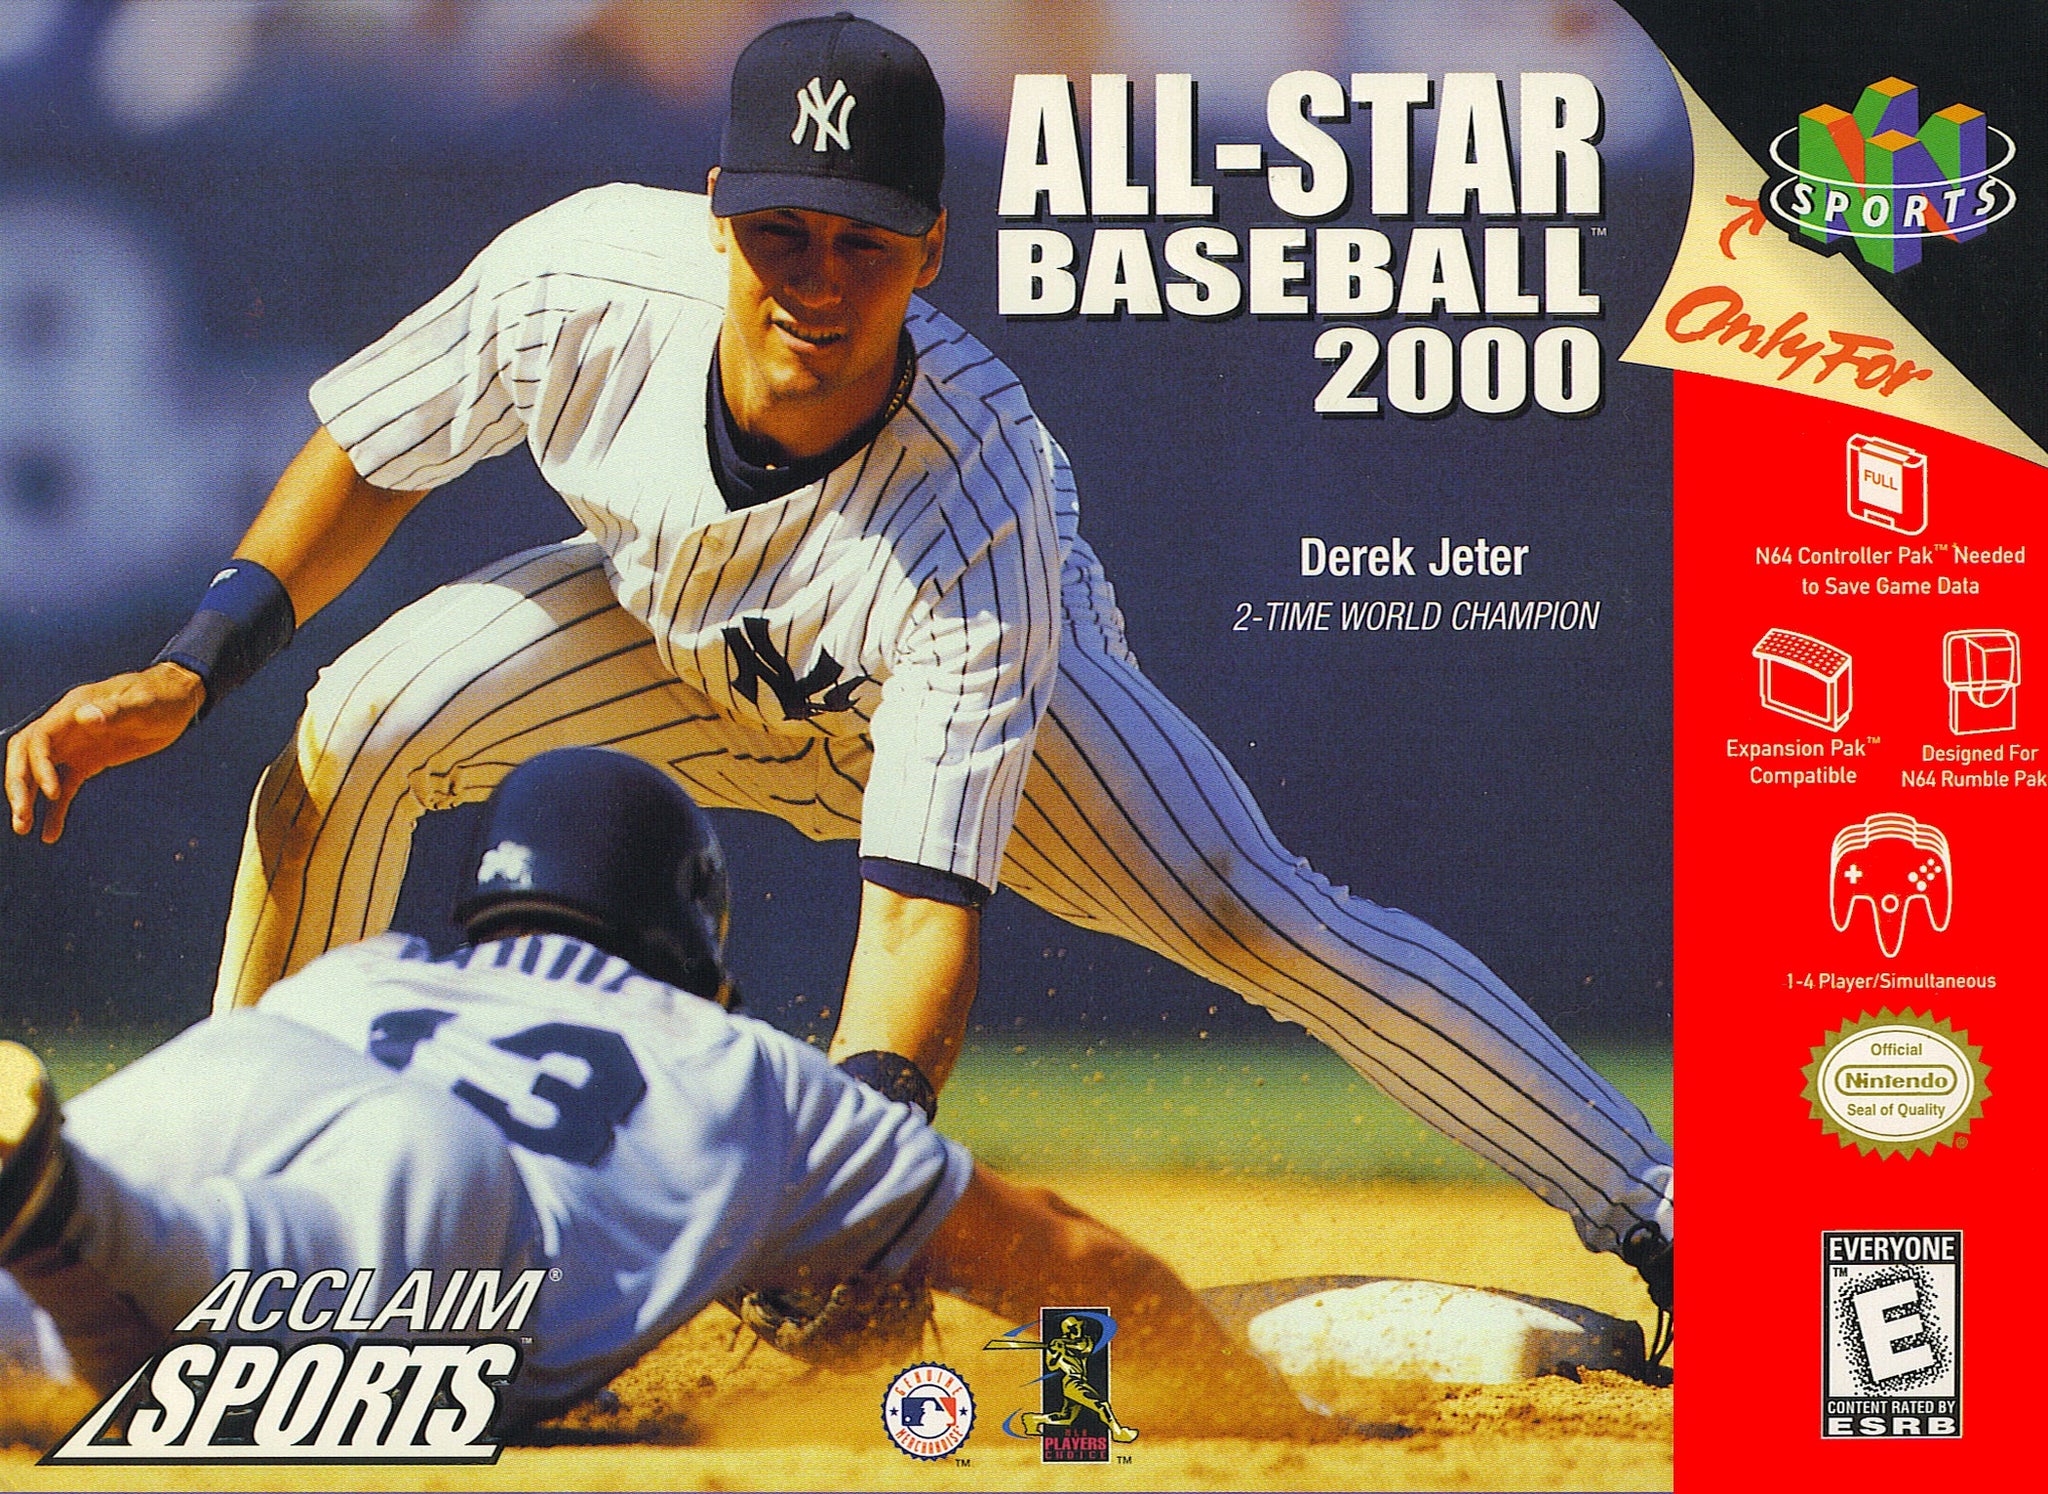 all star baseball 99